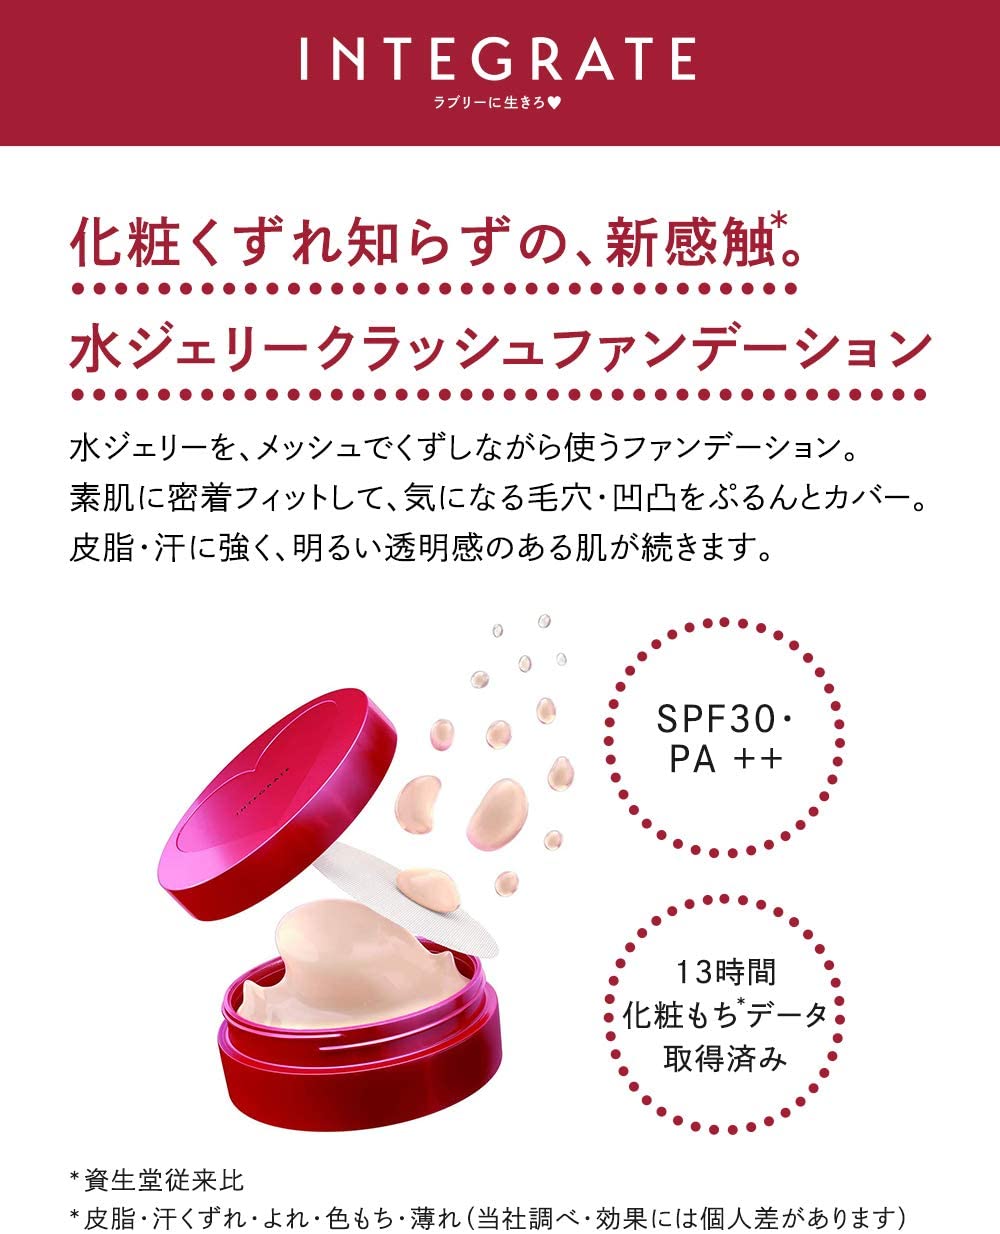 Shiseido SPF 30 foudation phấn nhật